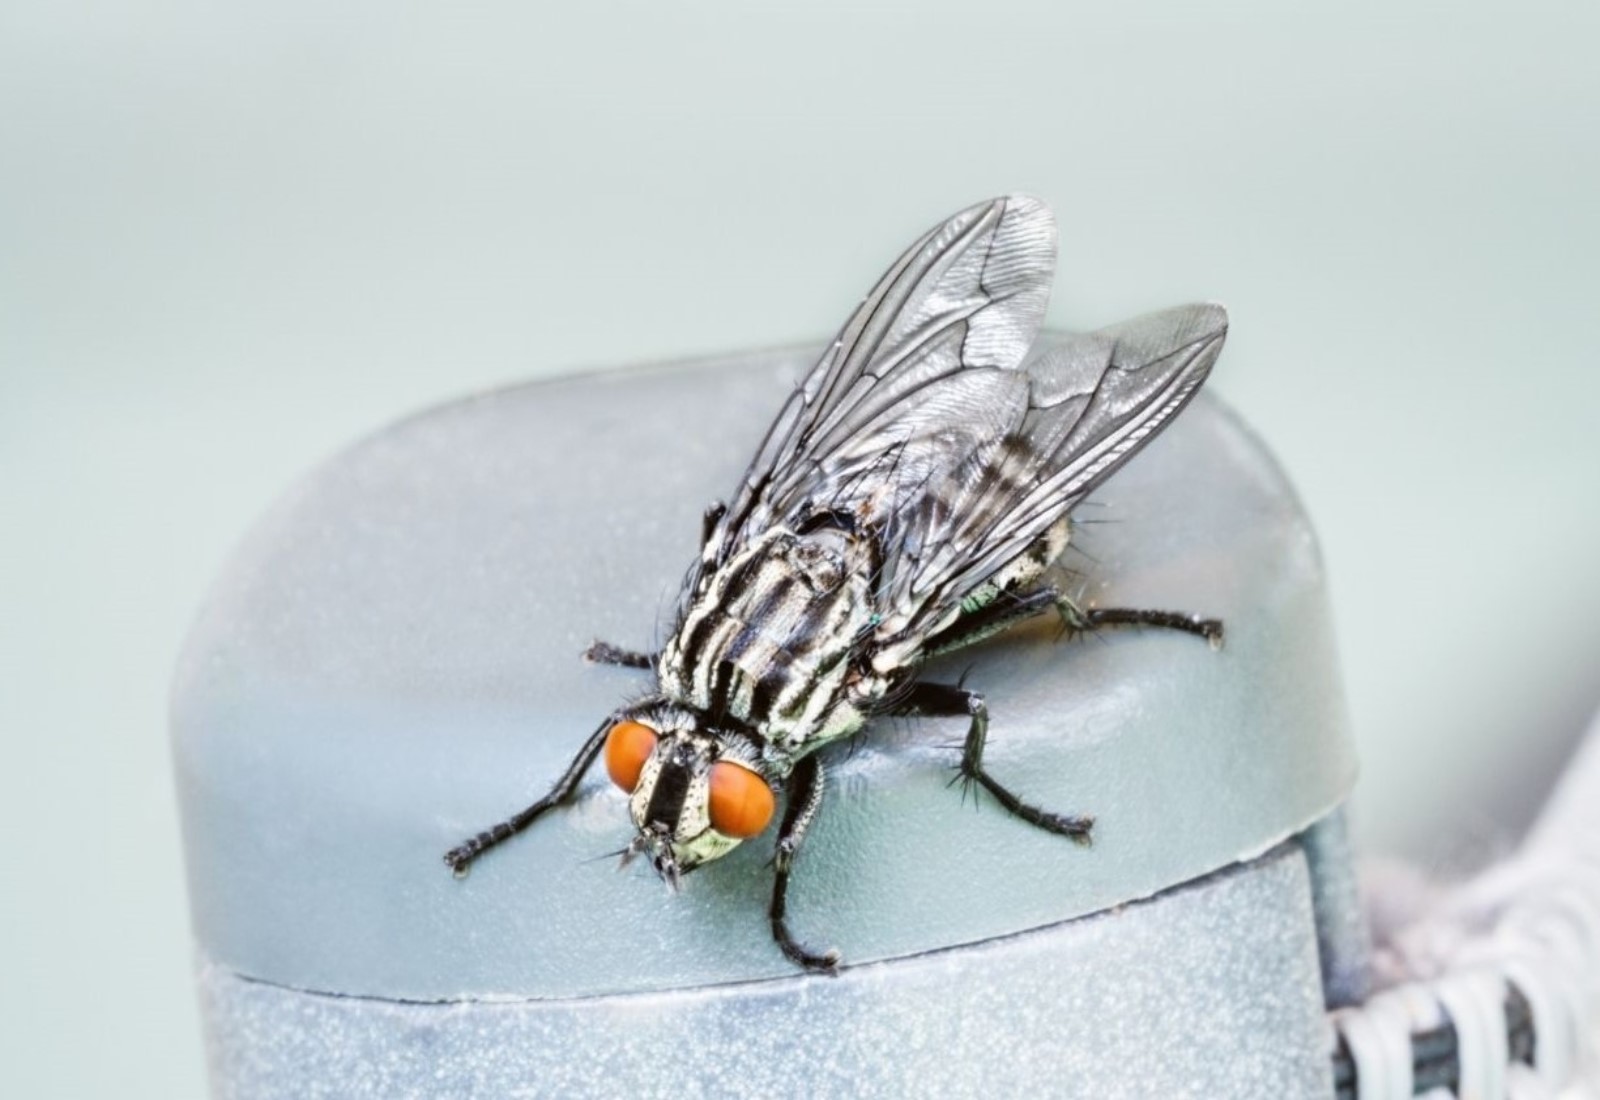 Fly spray infestation elimination extermination pest control